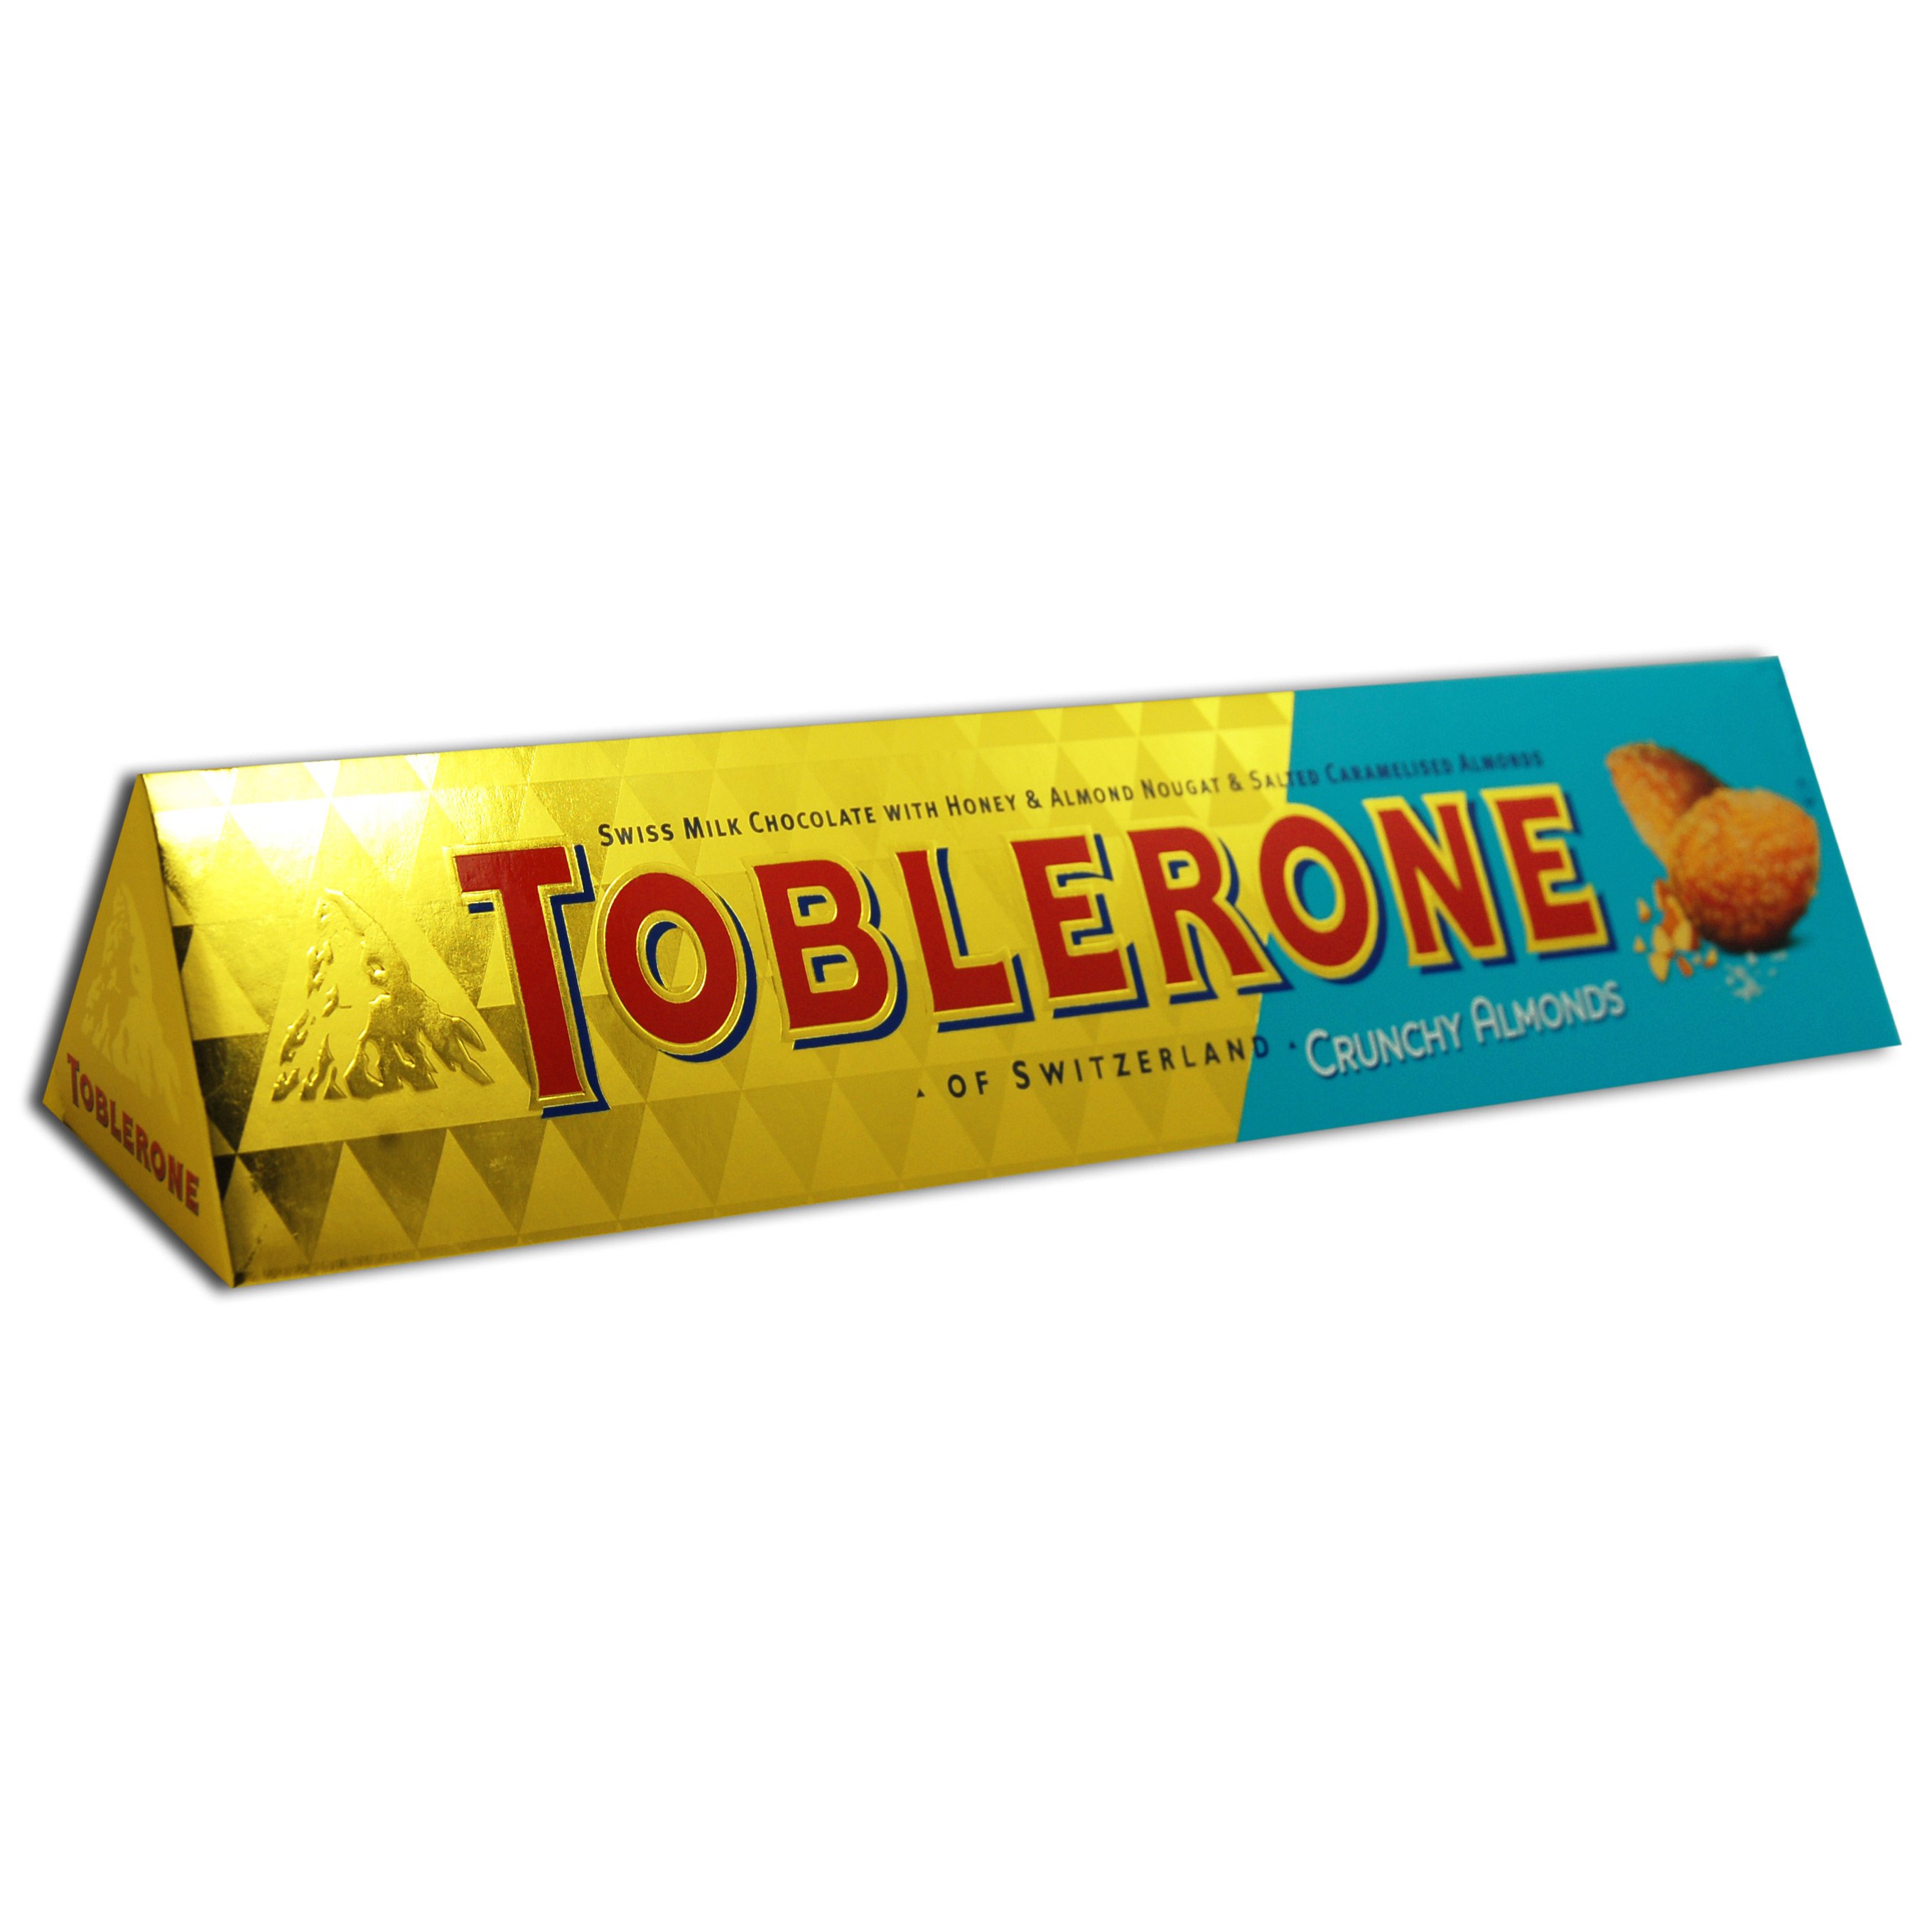 Шоколад toblerone купить. Toblerone 360g. Toblerone crunchy Almonds 360g. Toblerone crunchy Almonds шоколад. Toblerone шоколад 360г.